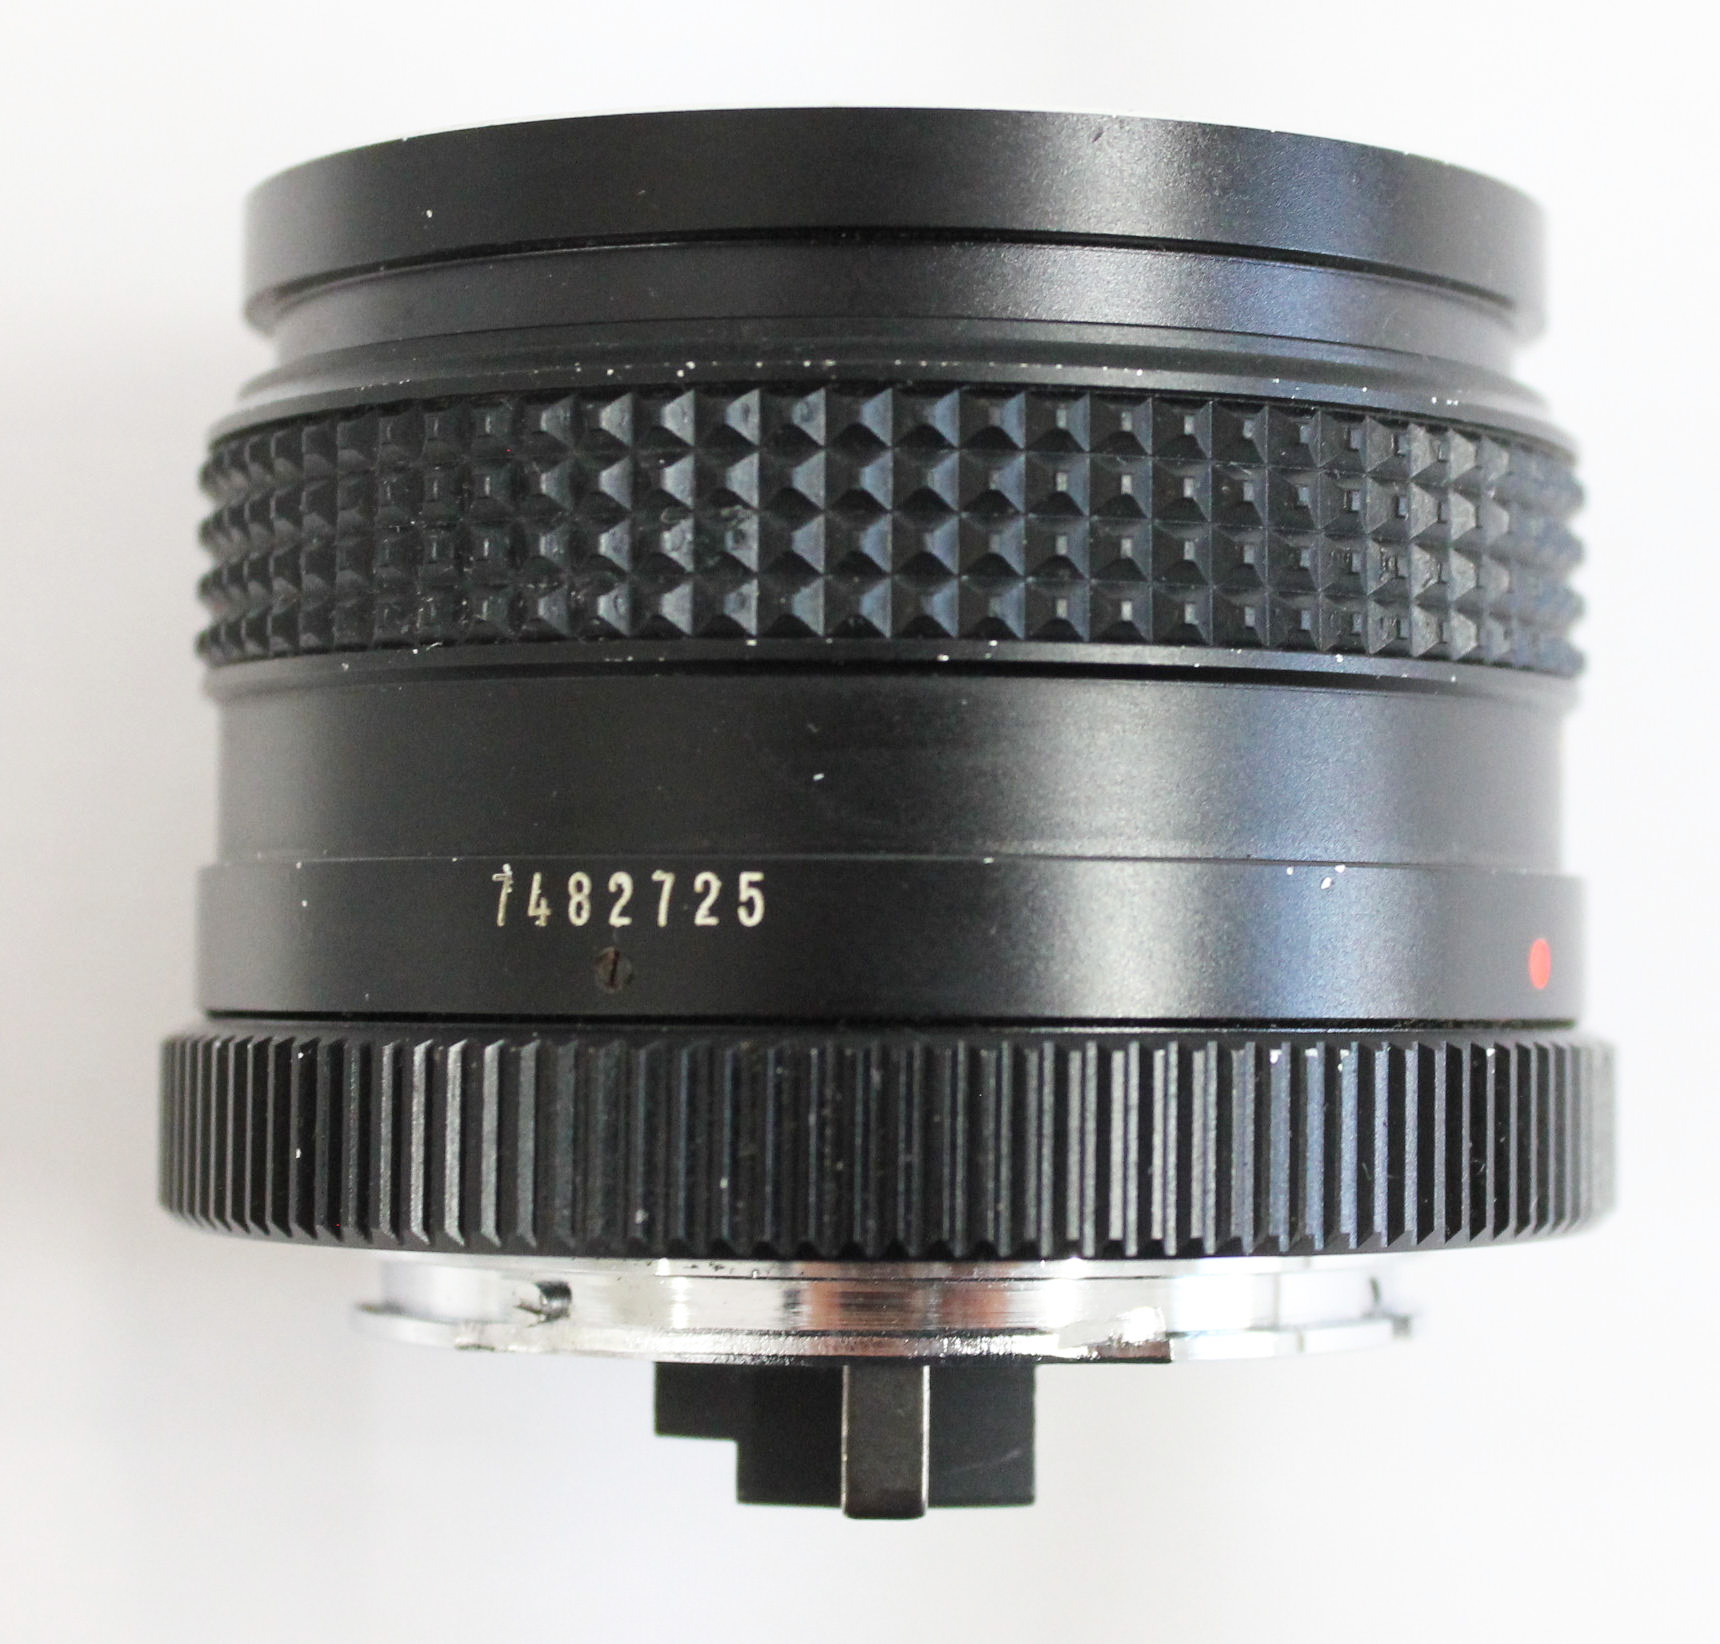  Konica HEXANON AR 50mm F/1.7 MF Lens from Japan Photo 5